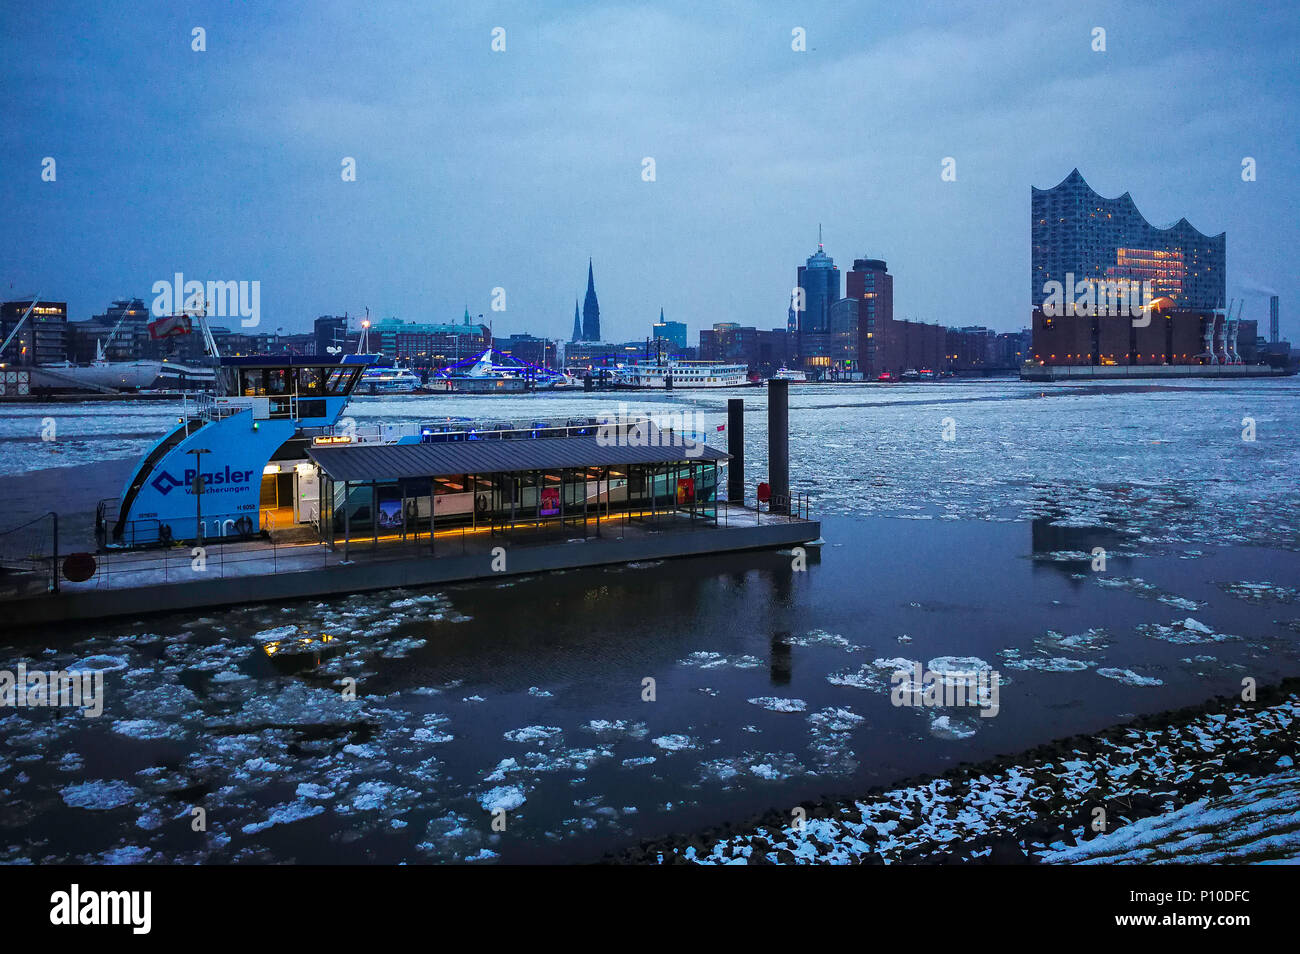 Elbe river under ice, ferry boats, Elbphilharmonie, Hamburg, Germany Stock Photo